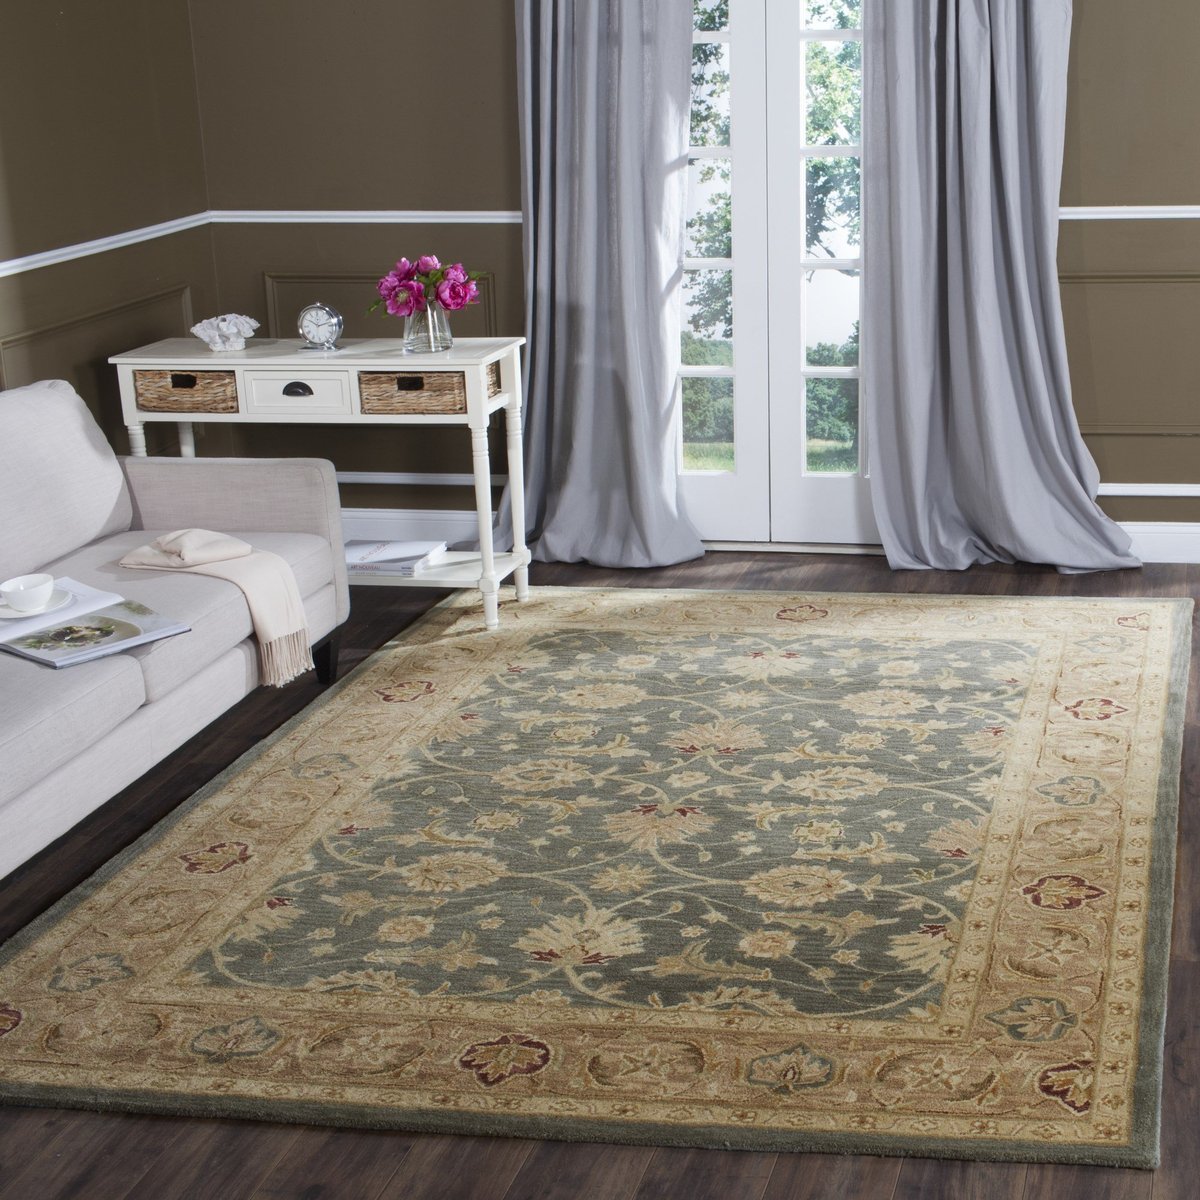 26 Louis Vuitton rug ideas  living room carpet, room carpet, soft carpet